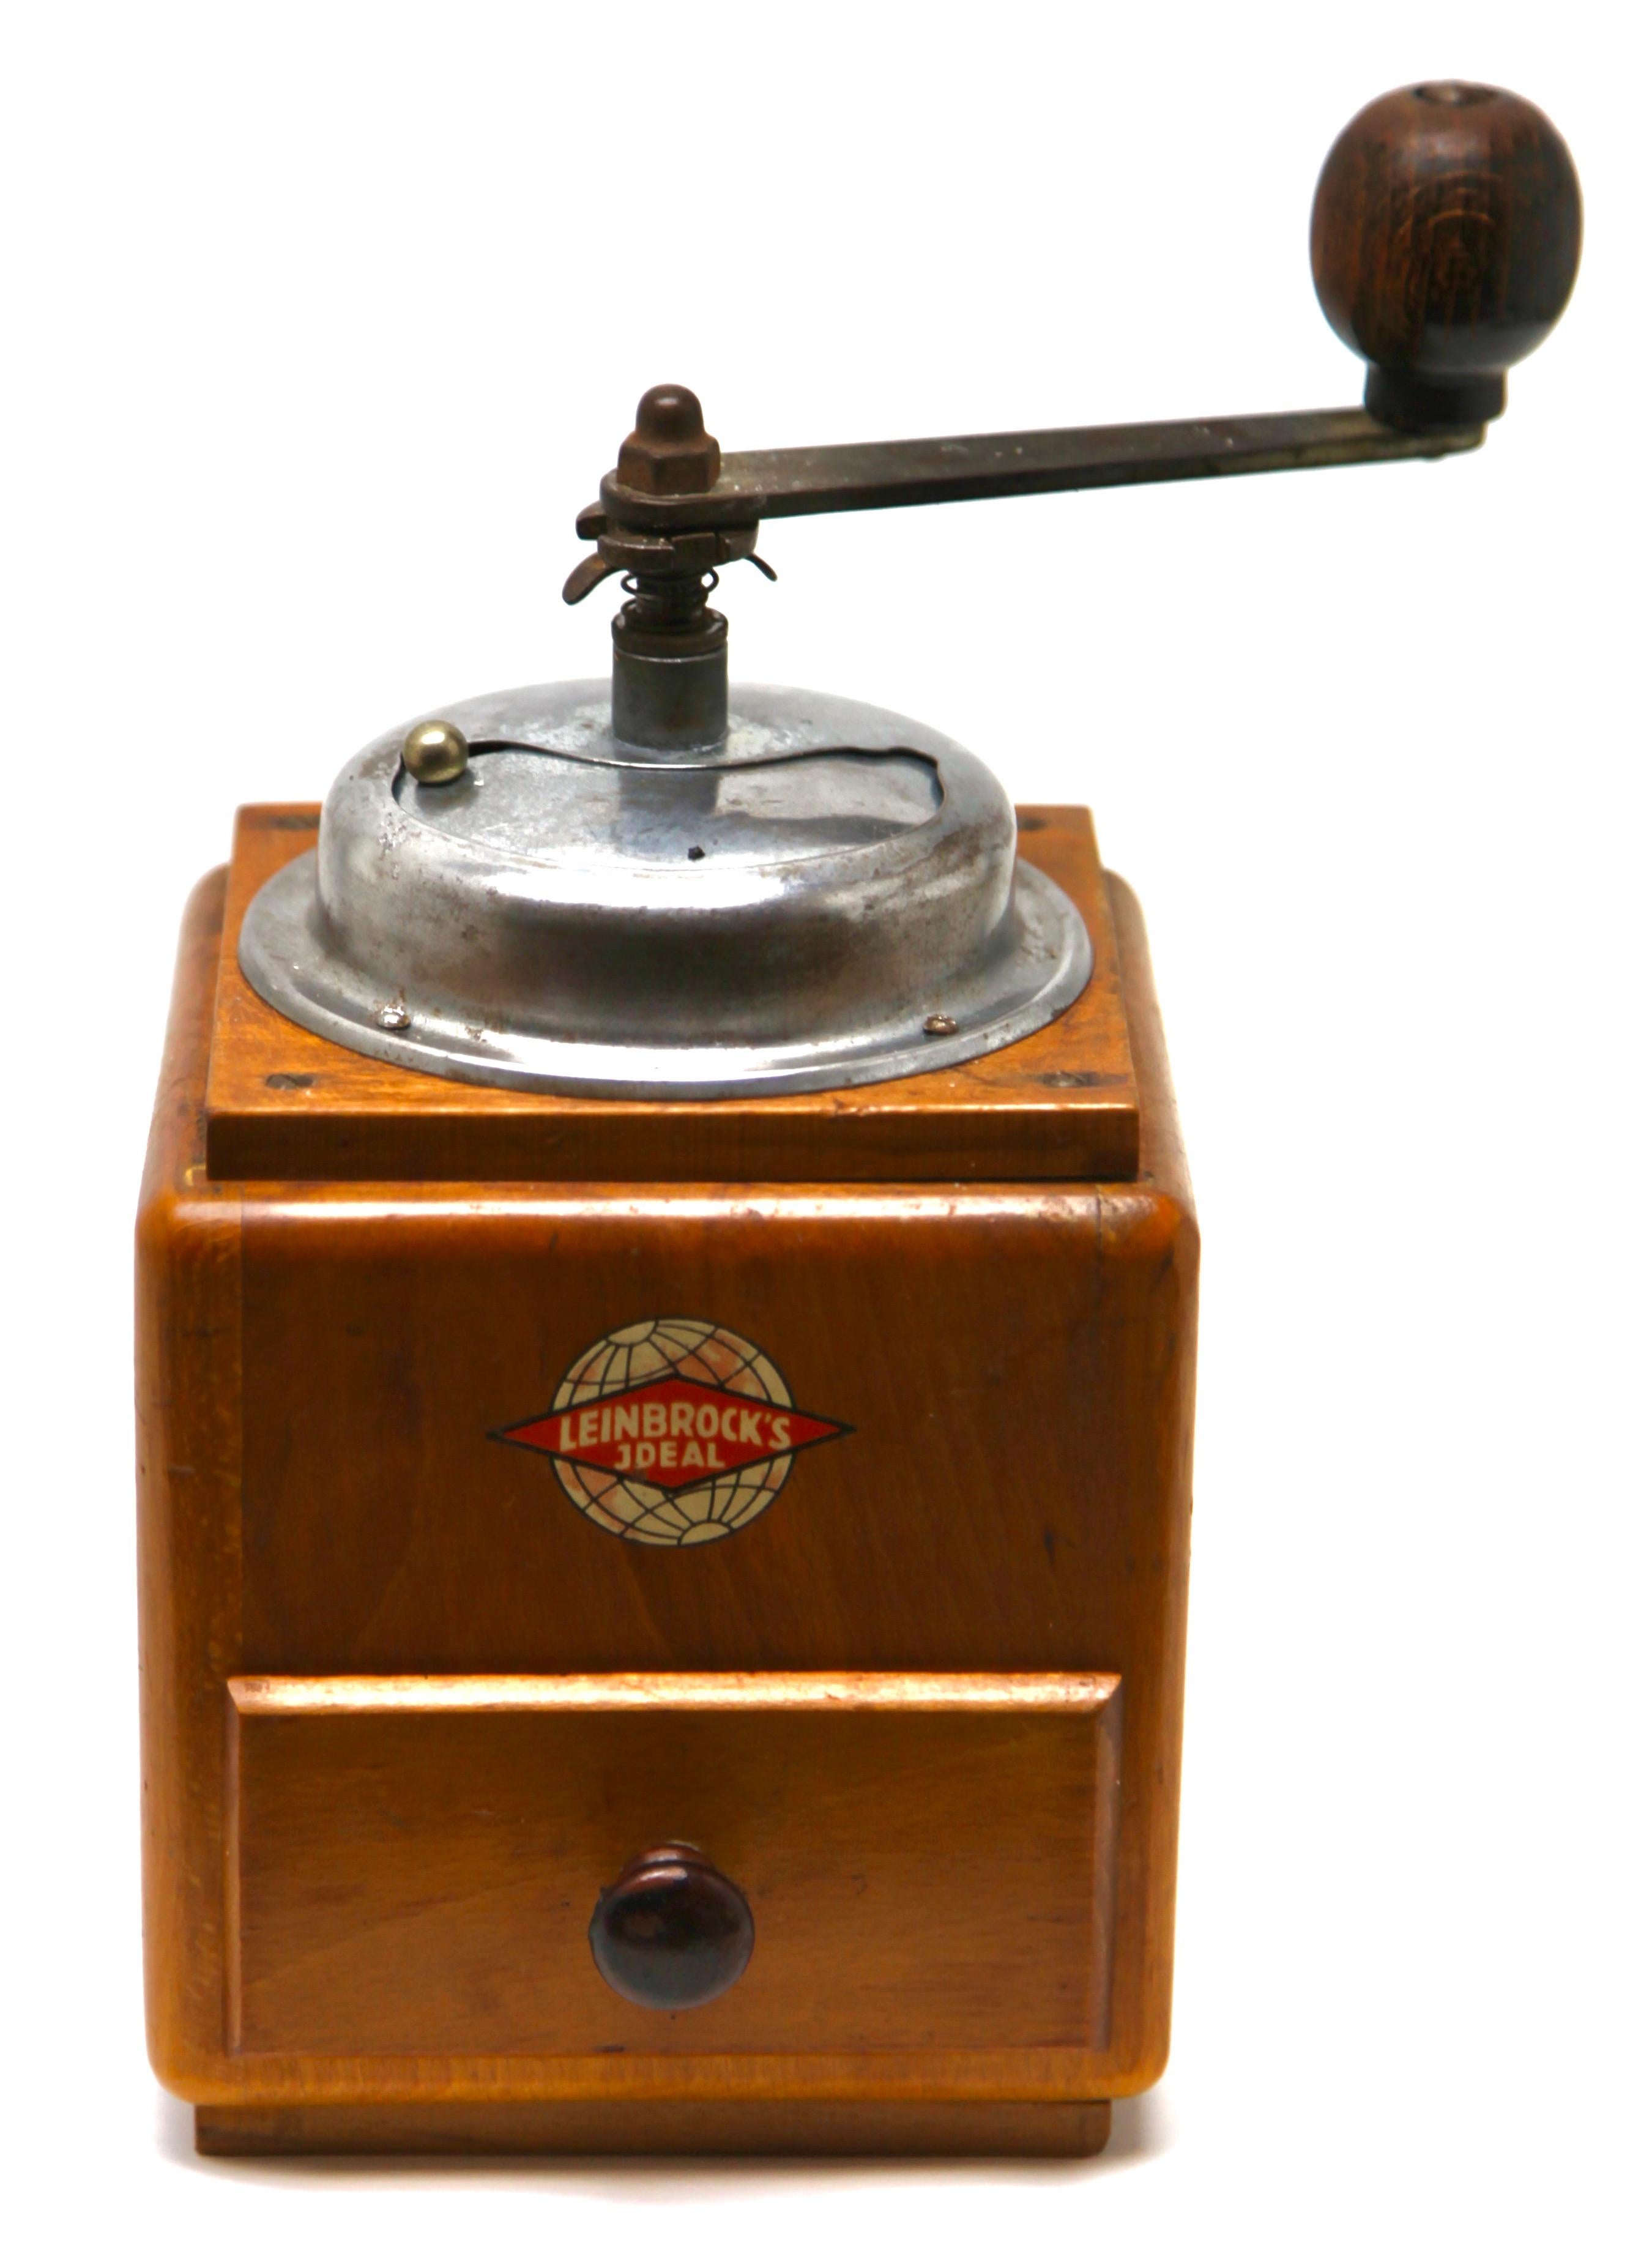 leinbrock ideal coffee grinder